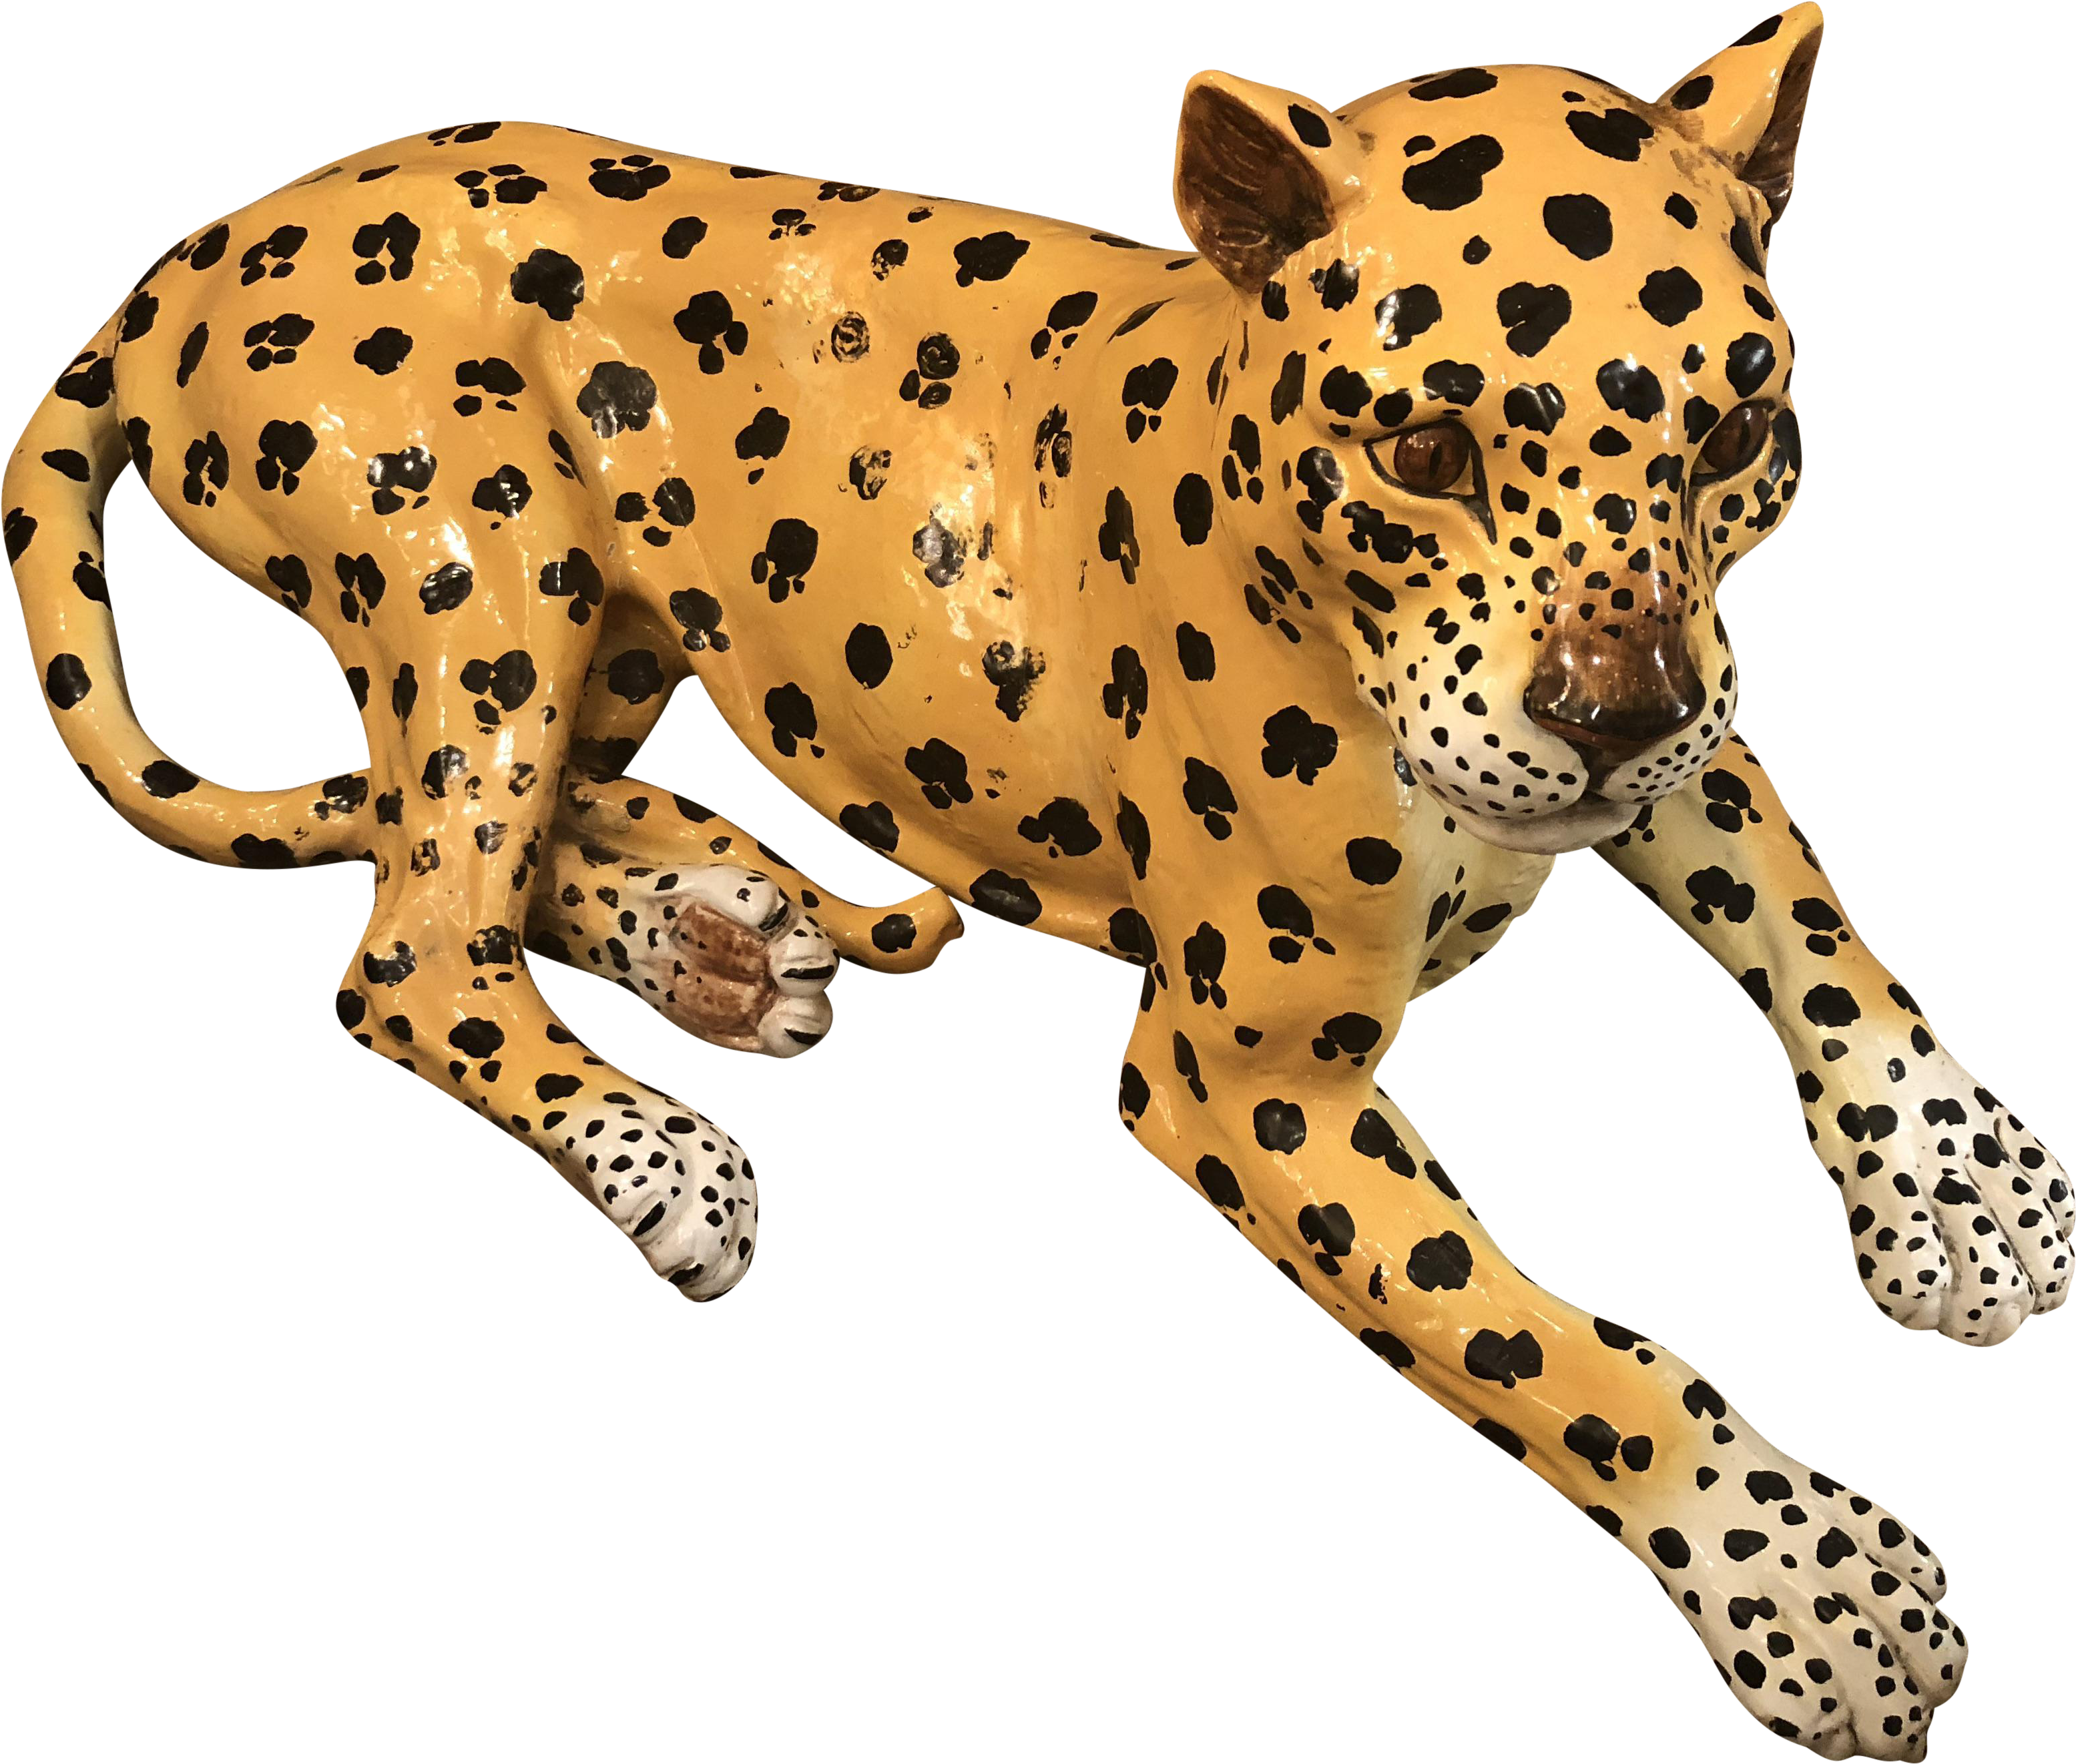 A Statue Of A Leopard